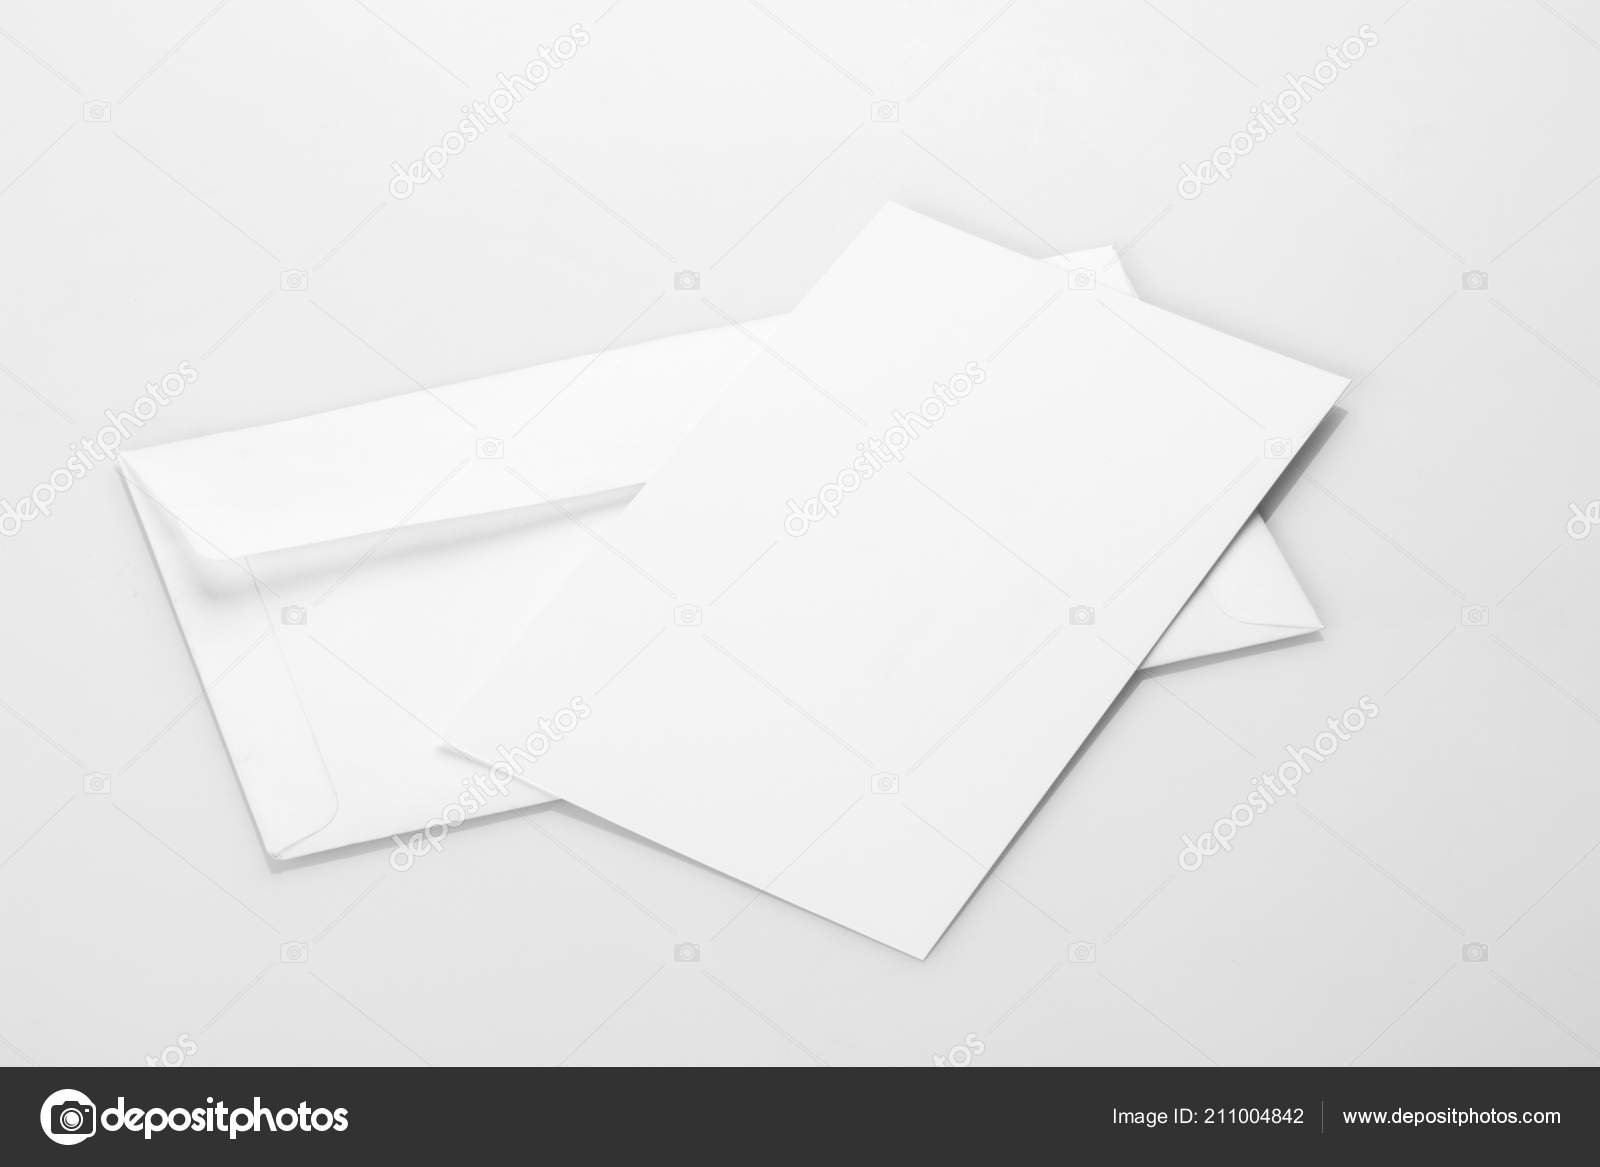 Download Blank White Envelope Mockup Invitation Card Stock Photo Image By C Akhilesh 211004842